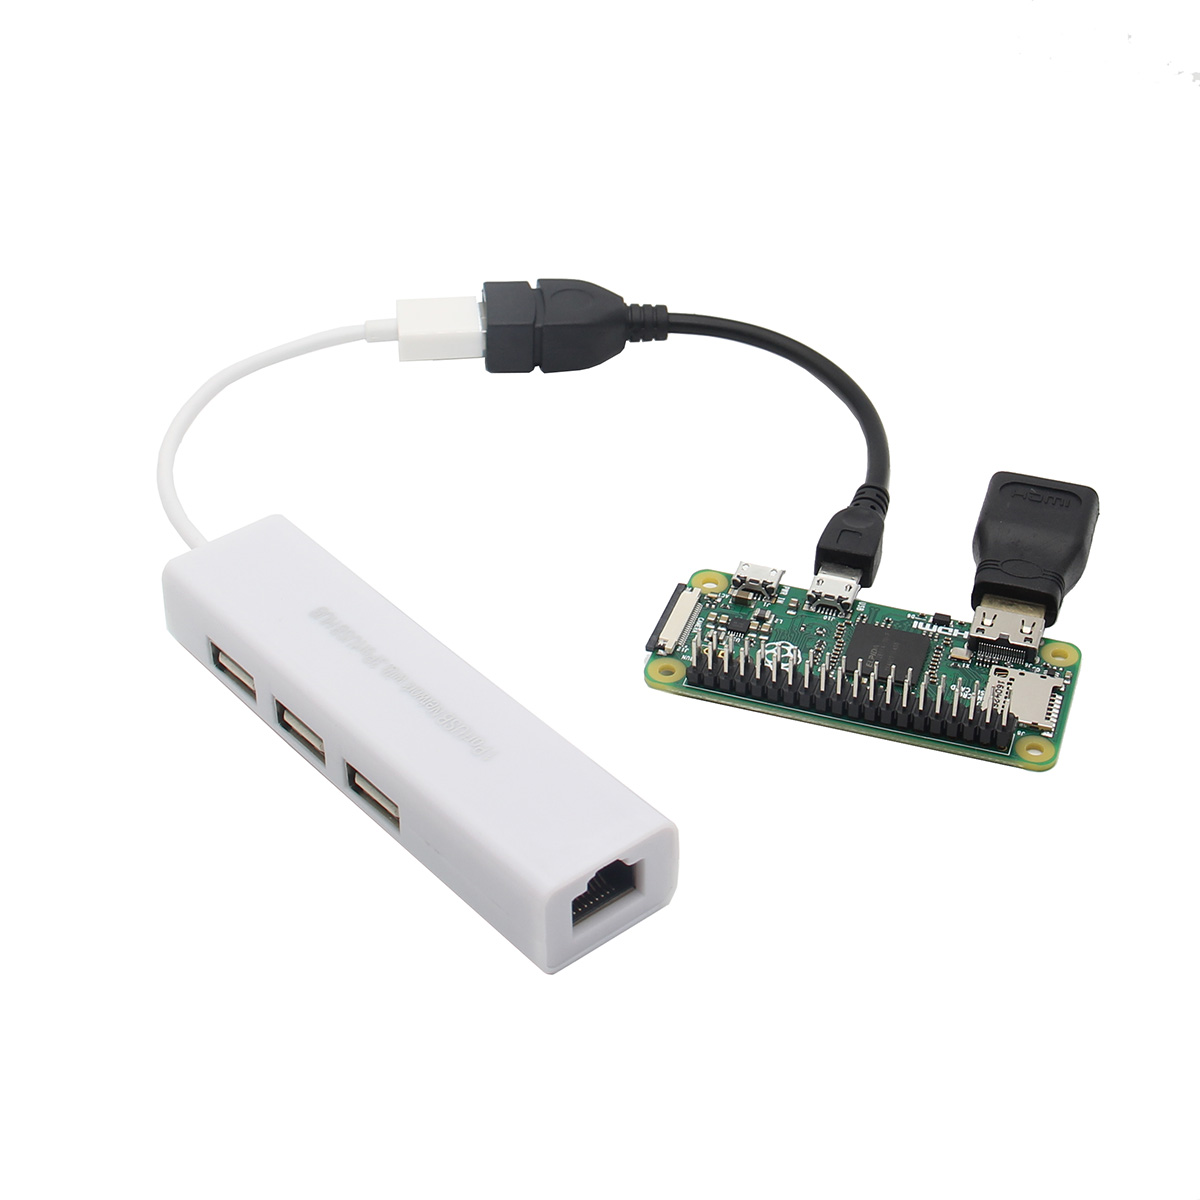 5-in-1 GPIO Cable + USB OTG Cable + Mini HDMI to HDMI Adapter + 2x20 Pin Header + Heat Sink Base Kit For Raspberry Pi Zero / Raspberry Pi Zero W. 11